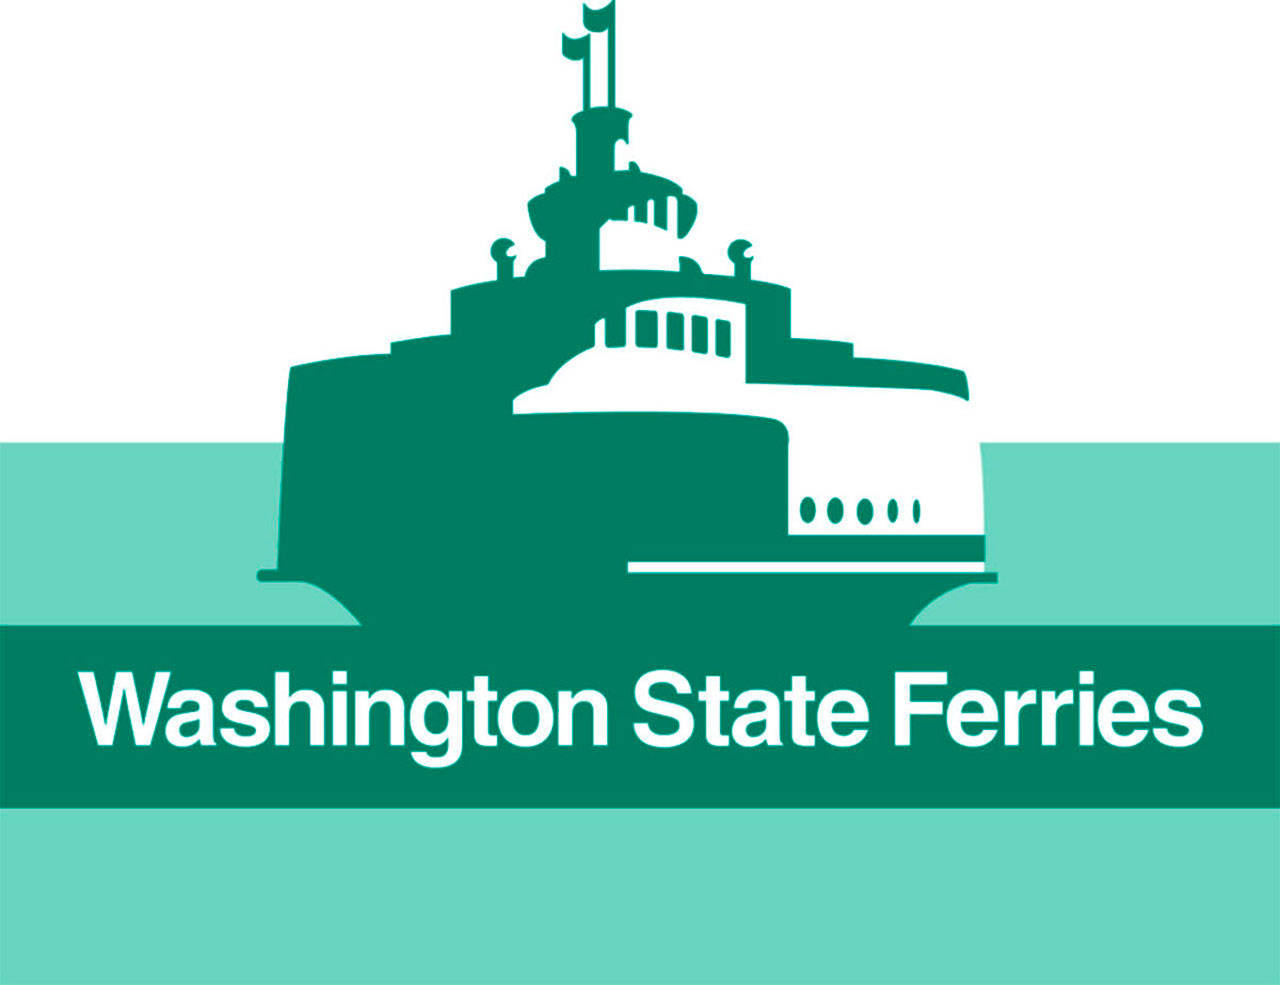 Interisland Washington State Ferries vessel back on schedule | Update